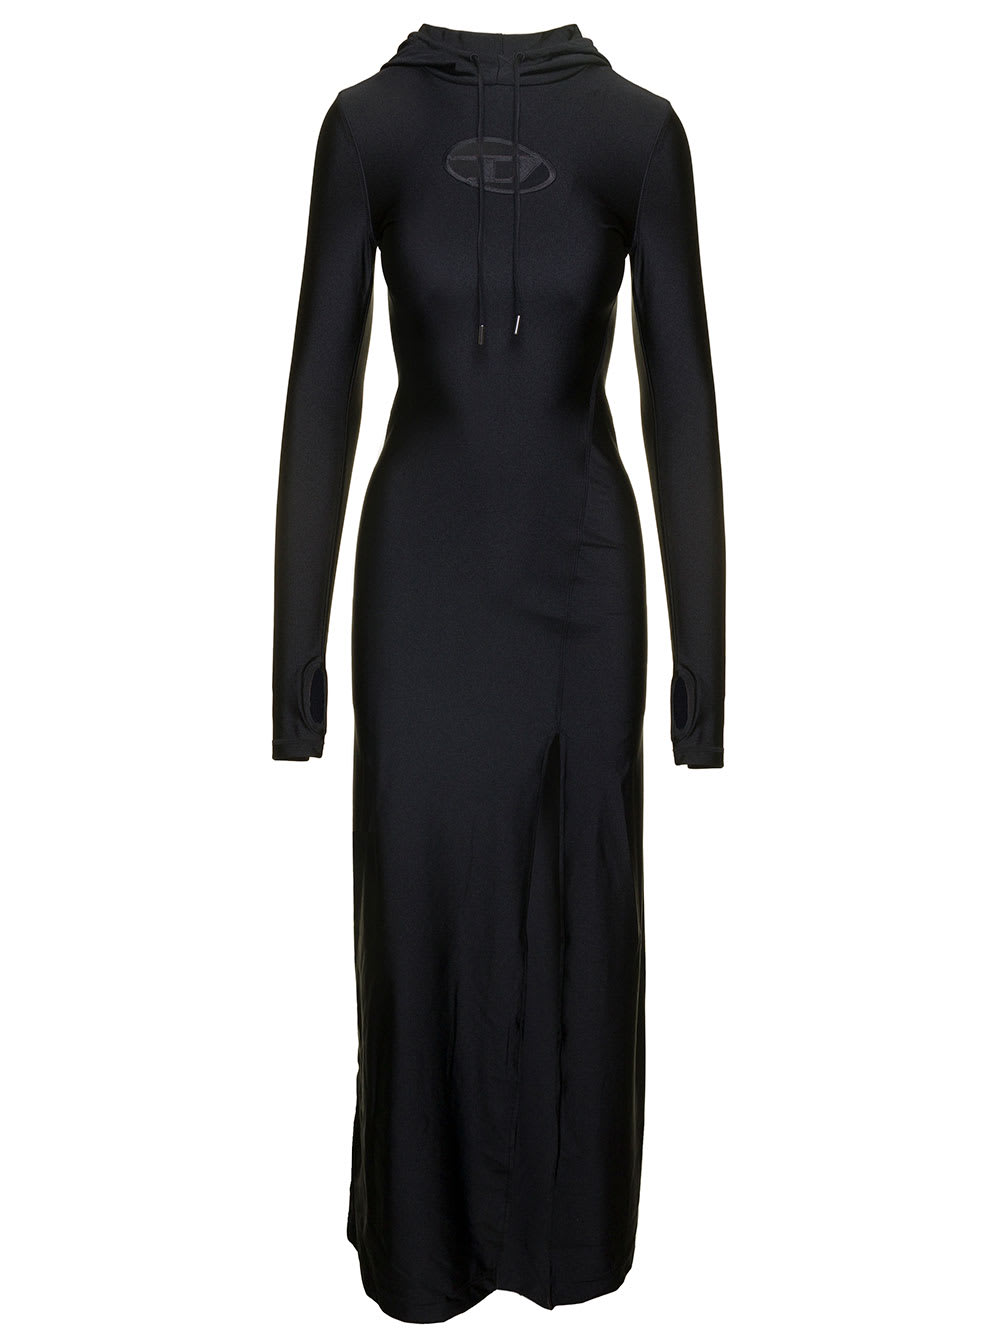 DIESEL MATHILDE LONG BLACK DRESS WITH OVAL-D LOGO DETAIL IN TECH FABRIC WOMAN